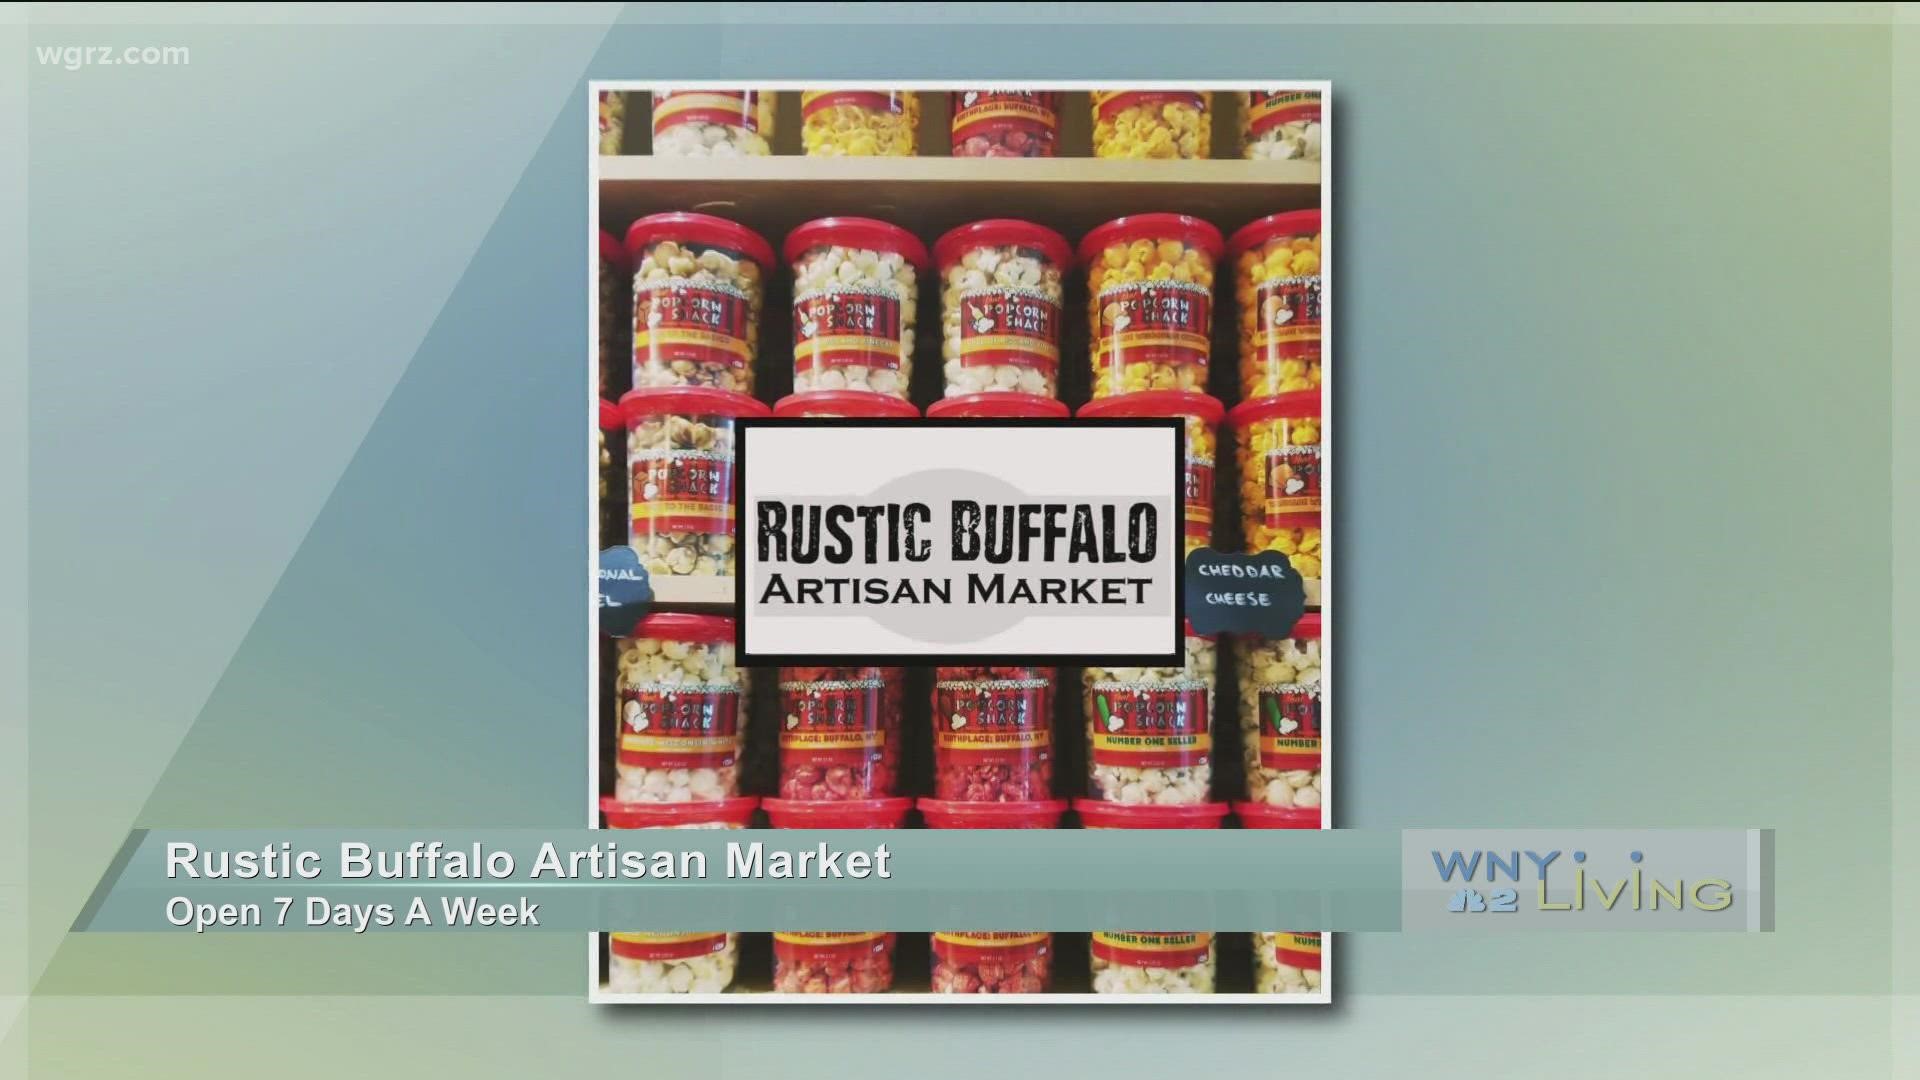 WNY Living - December 4 - Rustic Buffalo Artisan Market (THIS VIDEO IS SPONSORED BY RUSTIC BUFFALO ARTISAN MARKET)